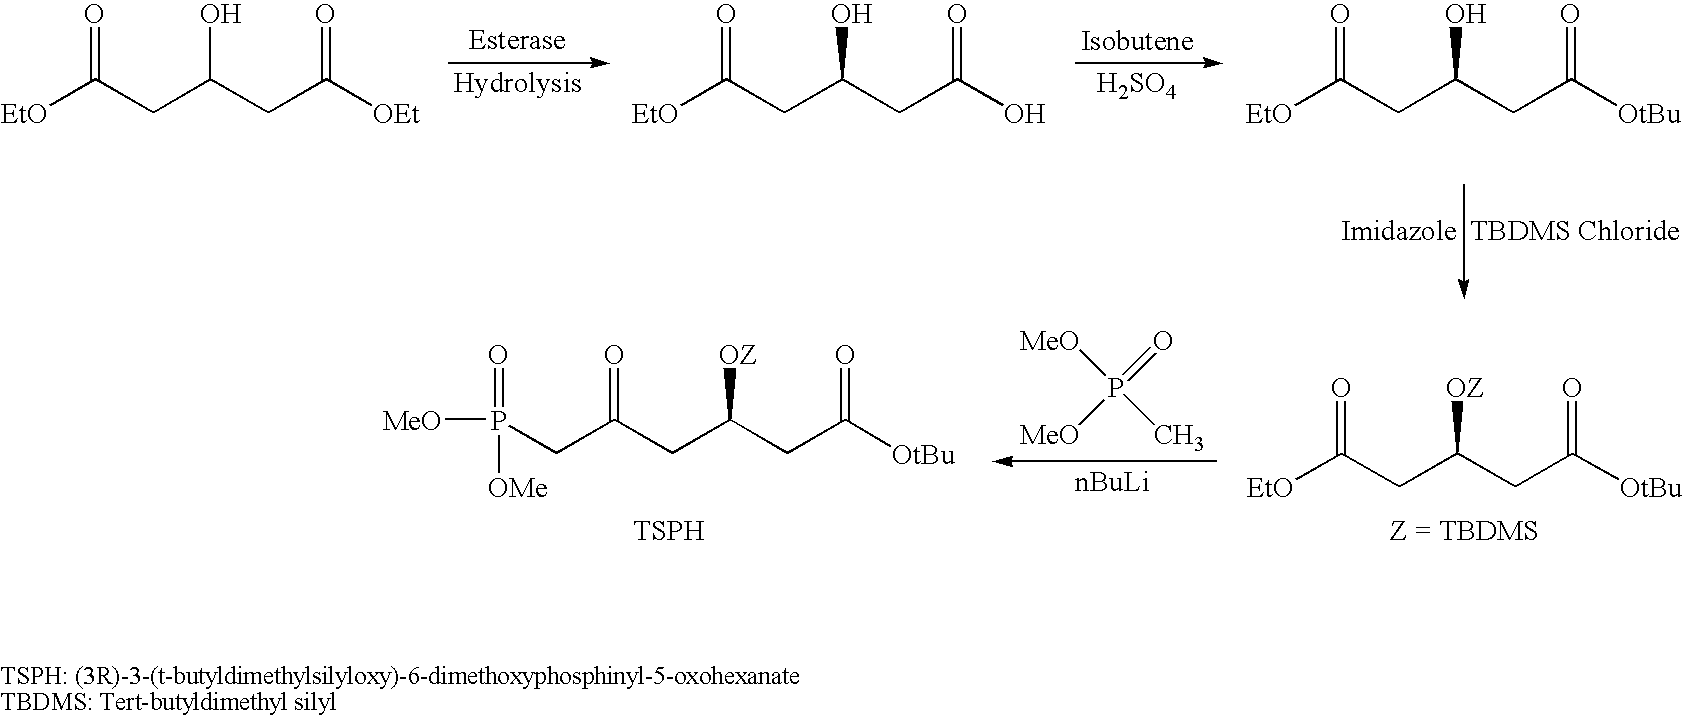 Rosuvastatin intermediates and process for the preparation of rosuvastatin